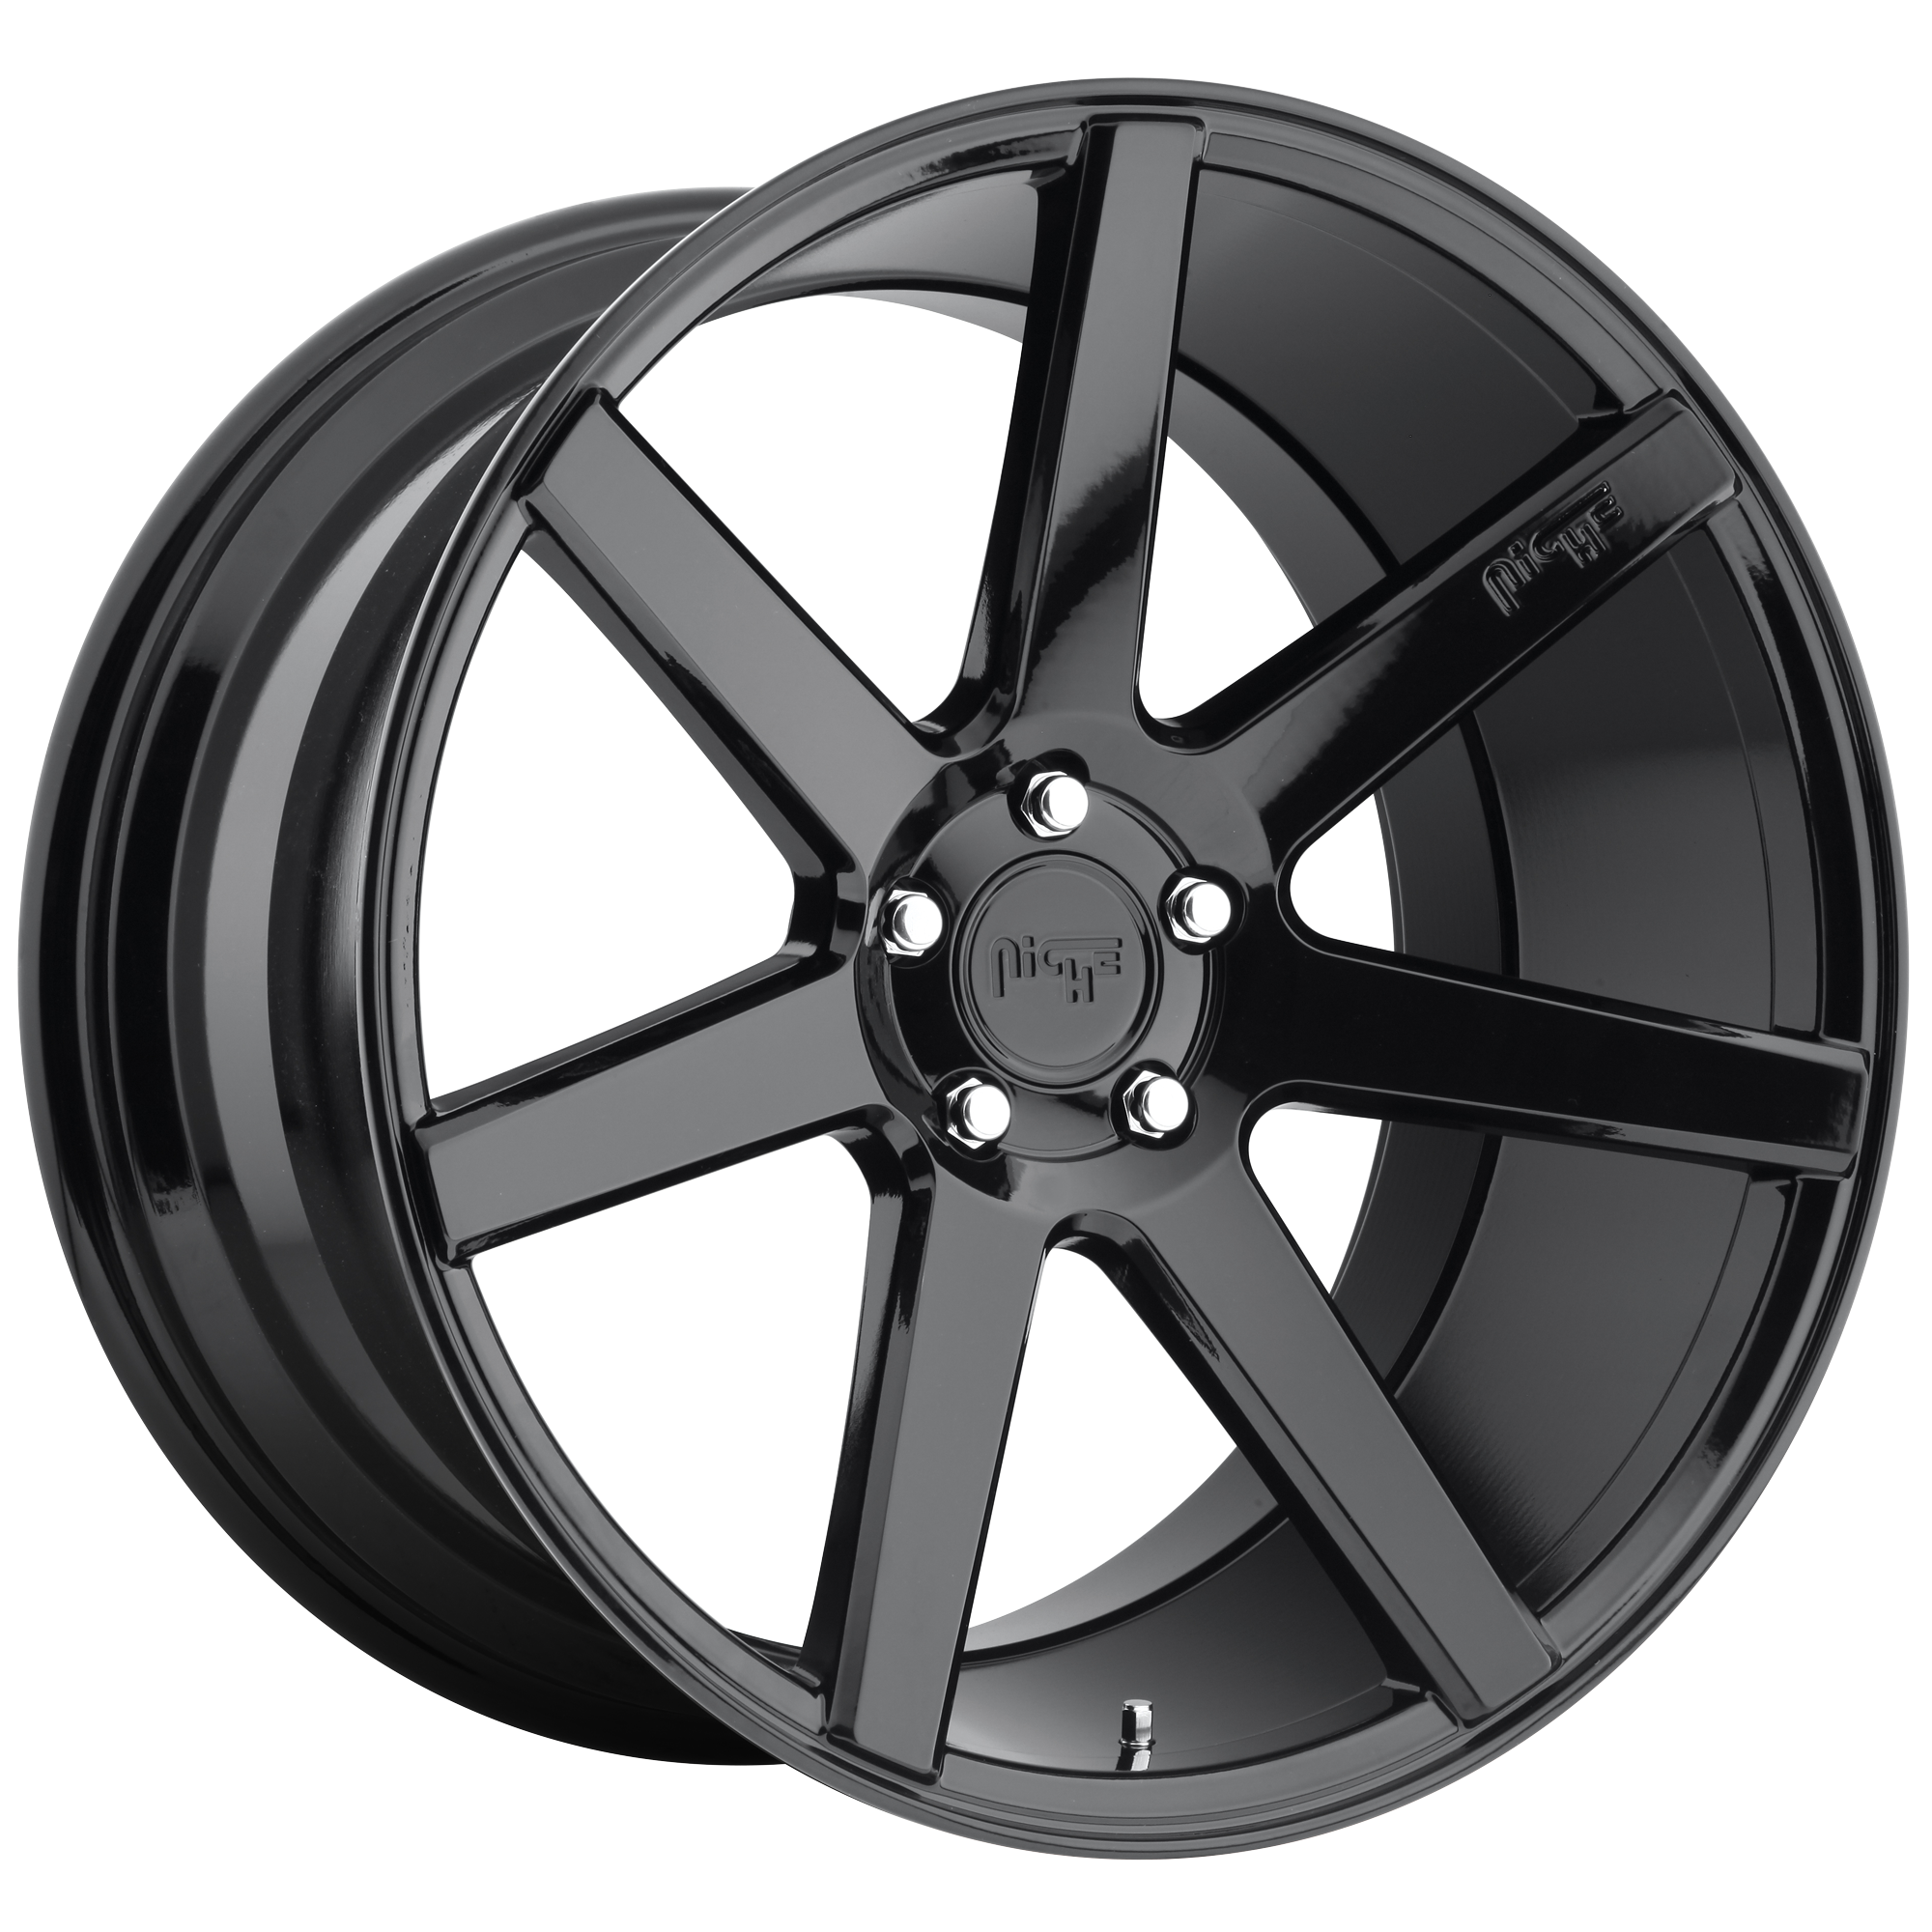 VERONA 20x9 5x115.00 GLOSS BLACK (38 mm) - Tires and Engine Performance